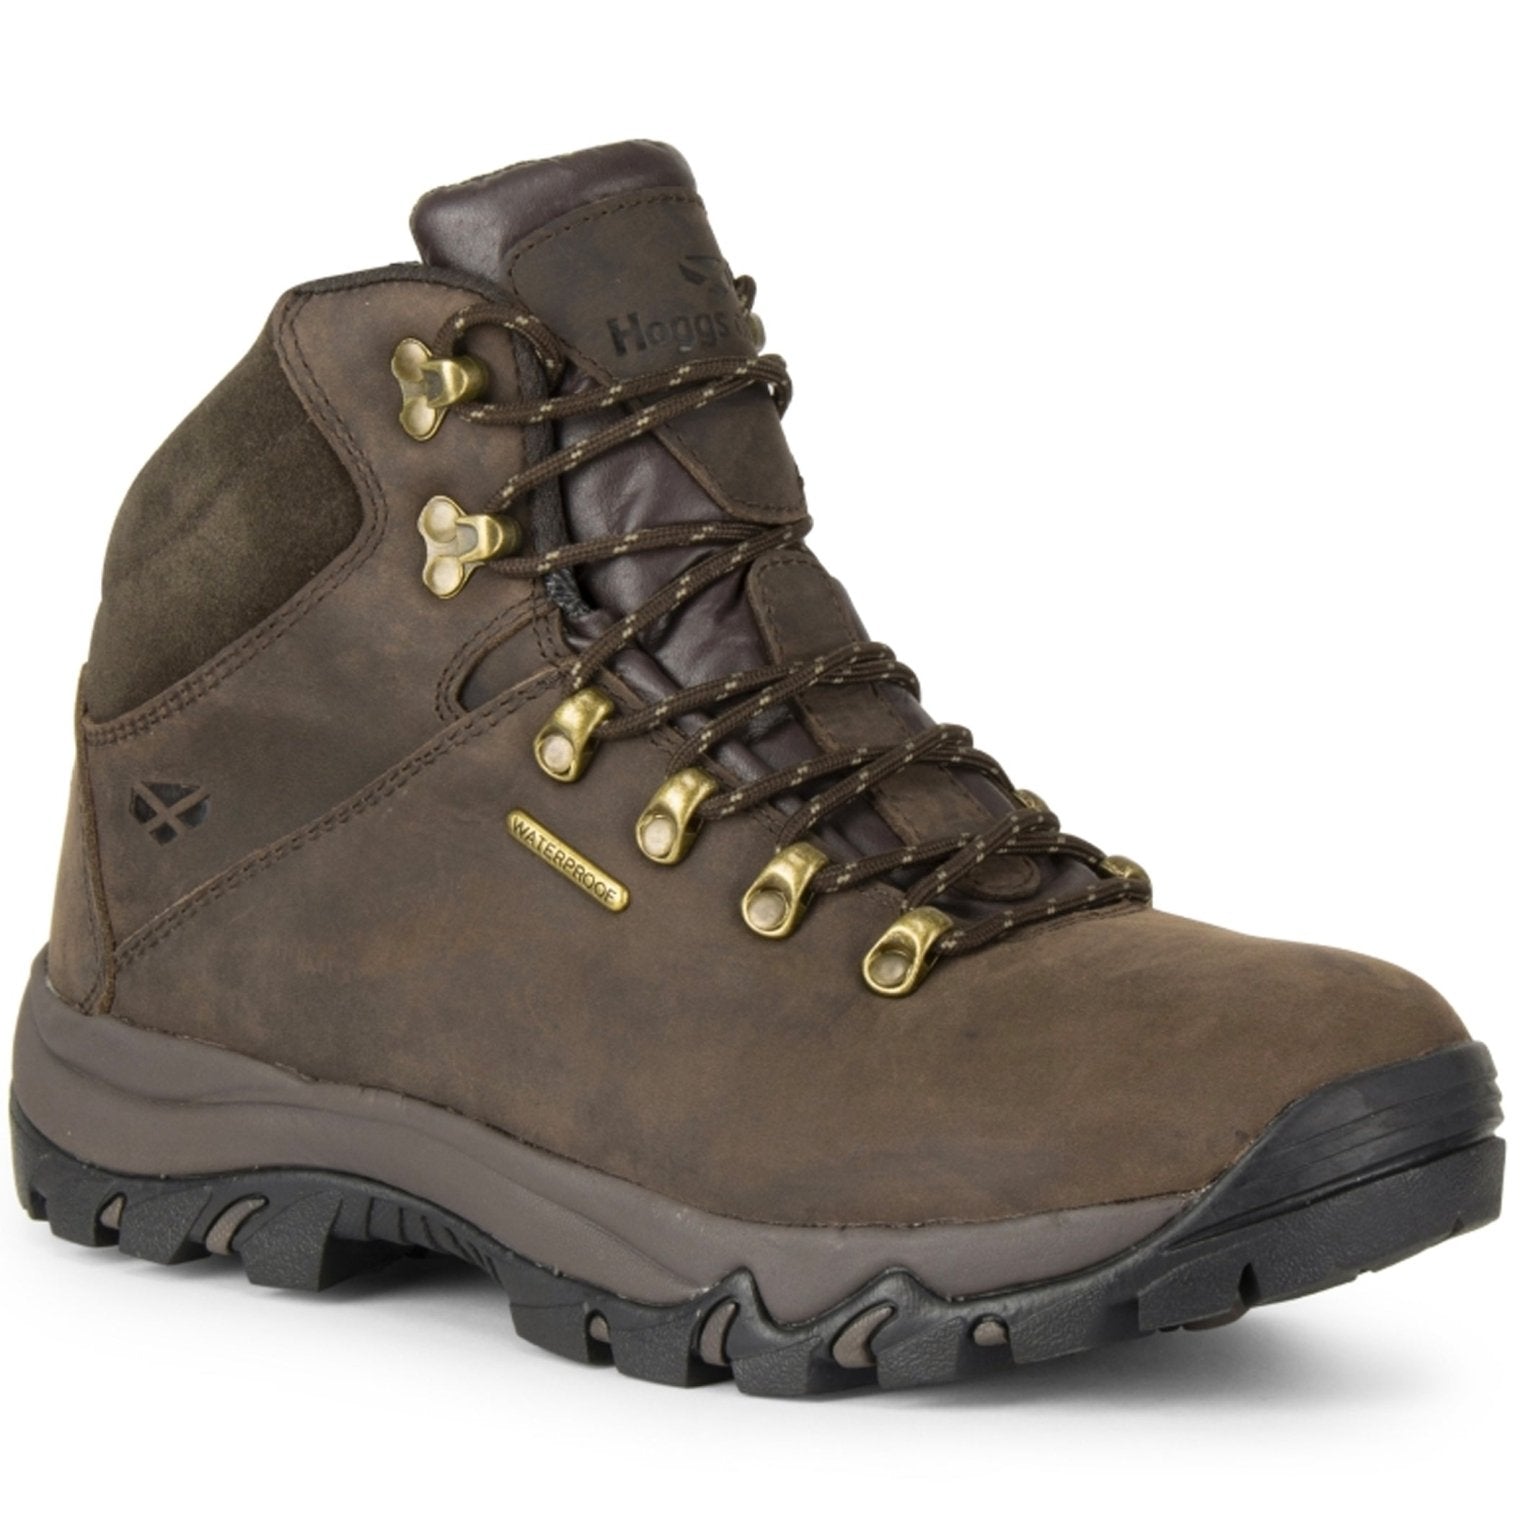 Hoggs of Fife Hoggs of Fife - Waterproof leather walking Boot / waterproof hiking boot - Glencoe Boots